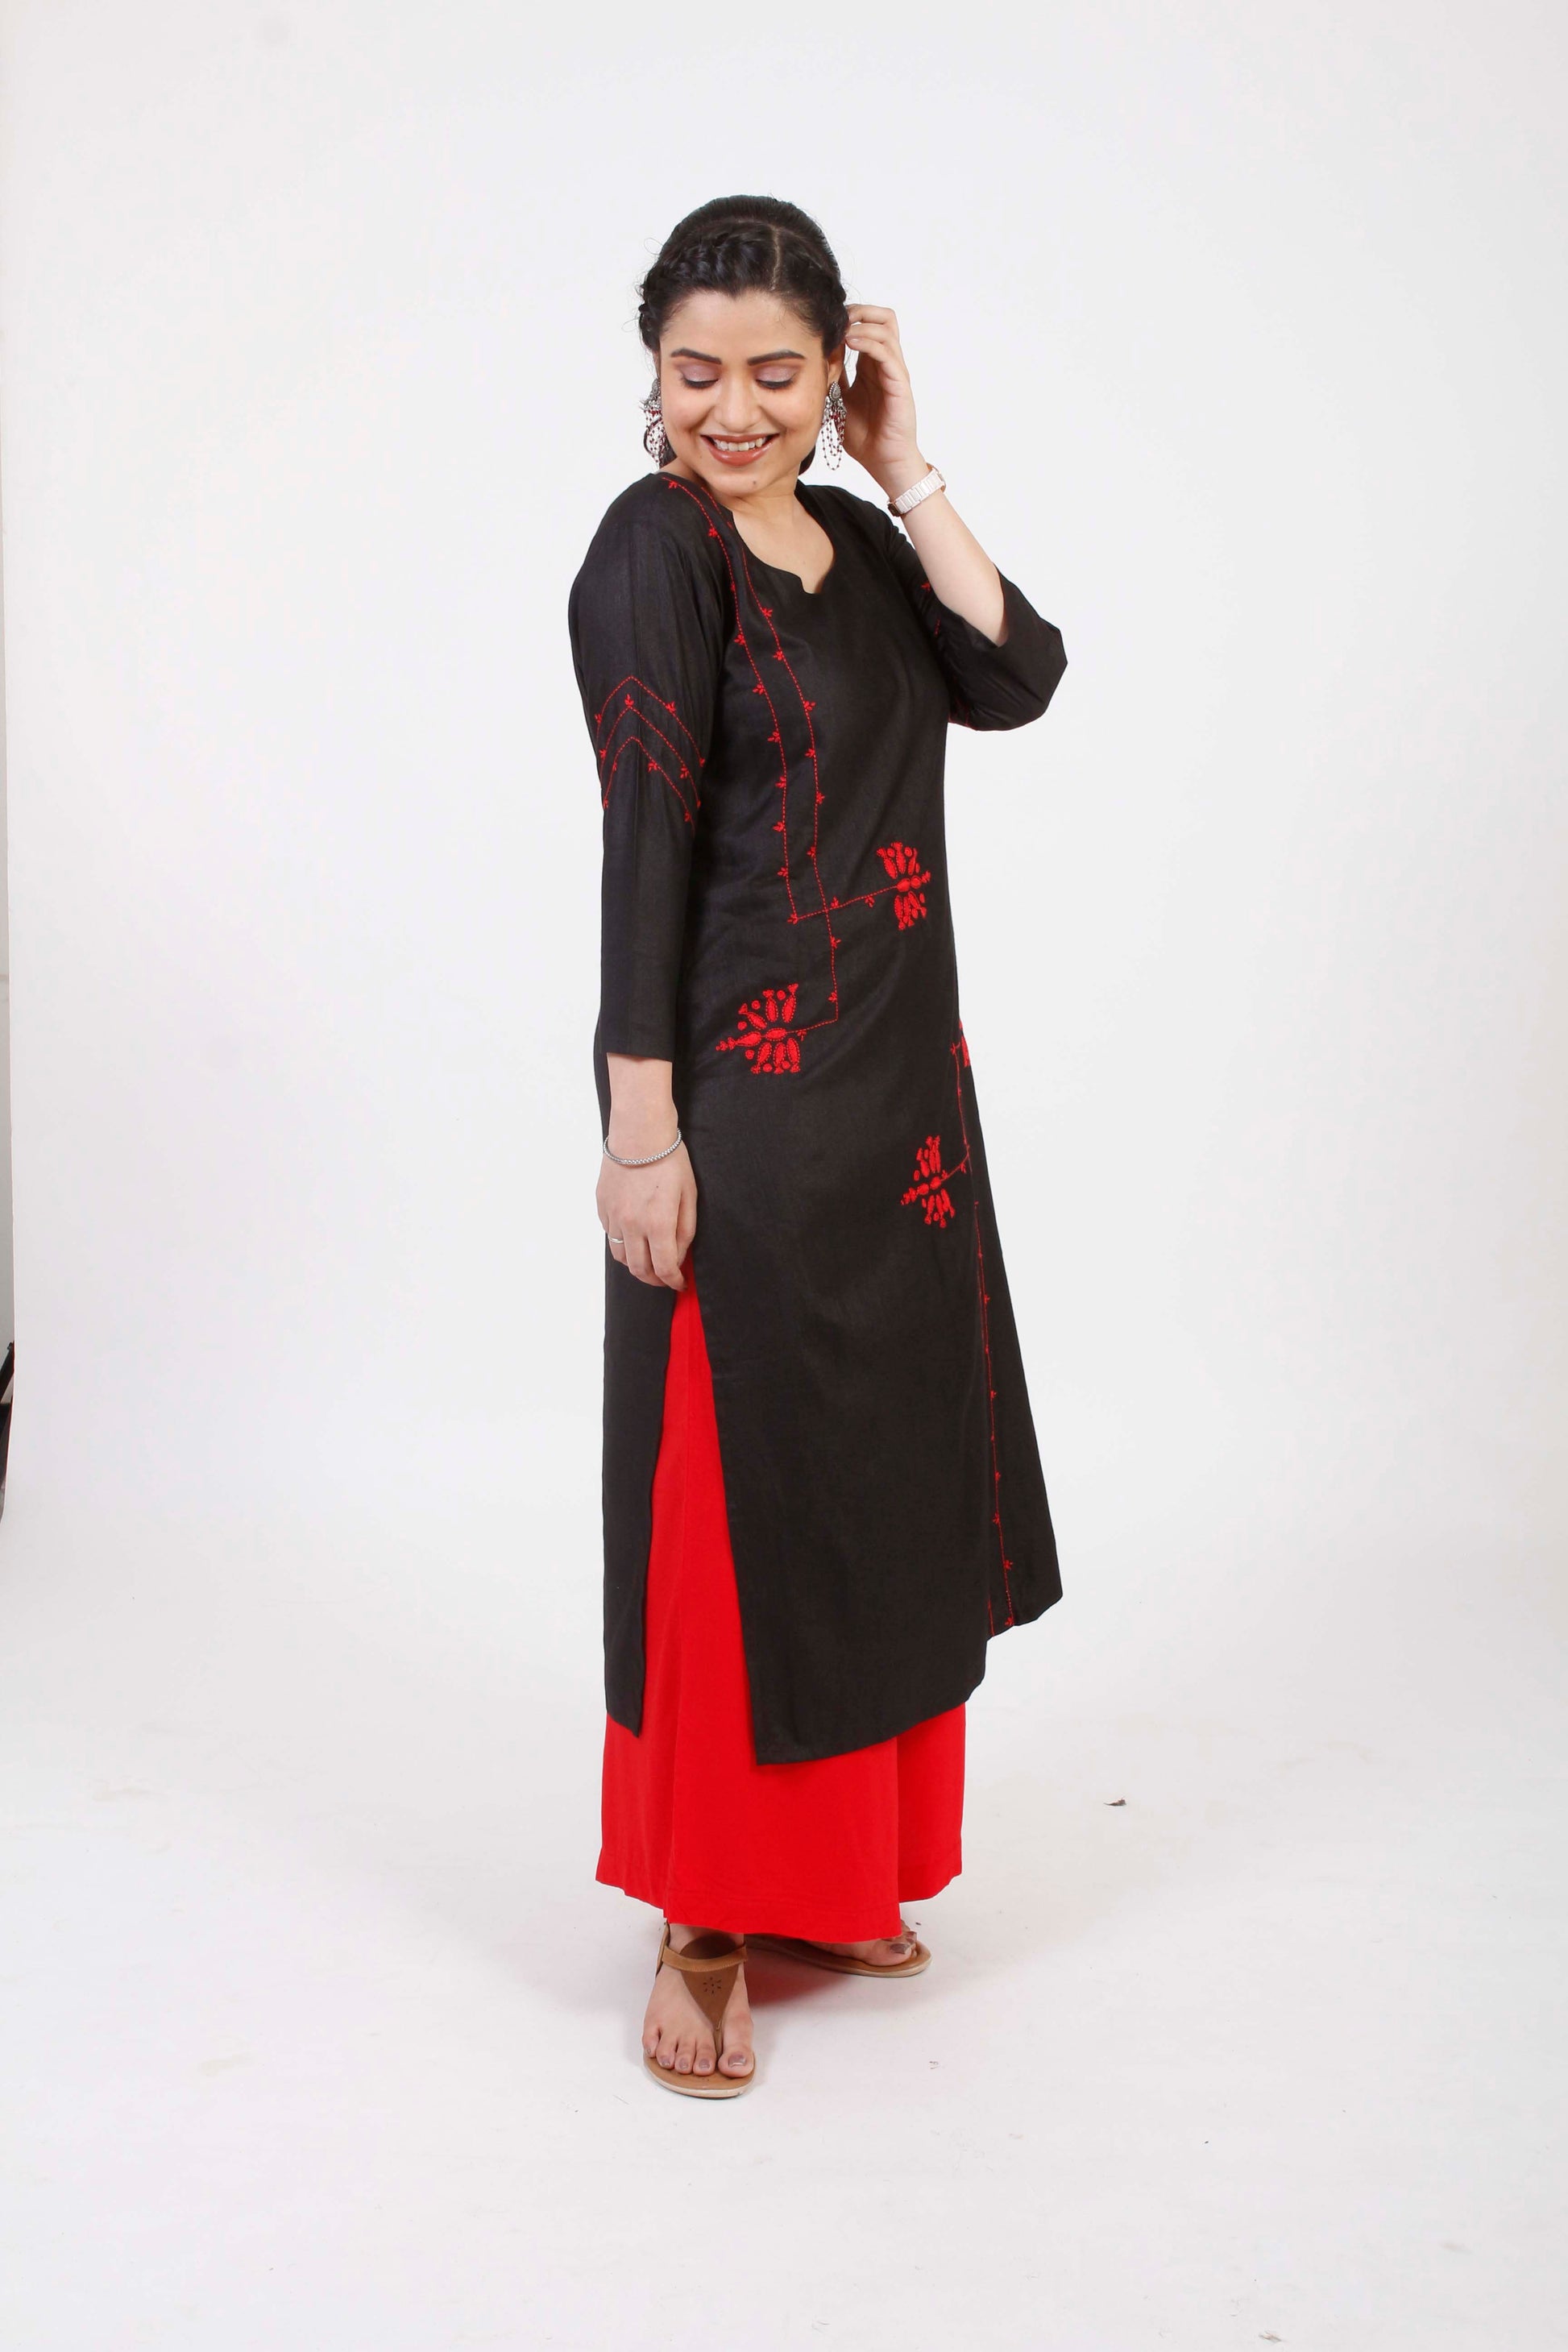 Urmul Fatima Hand Embroidered Black Cotton Silk Kurta Online